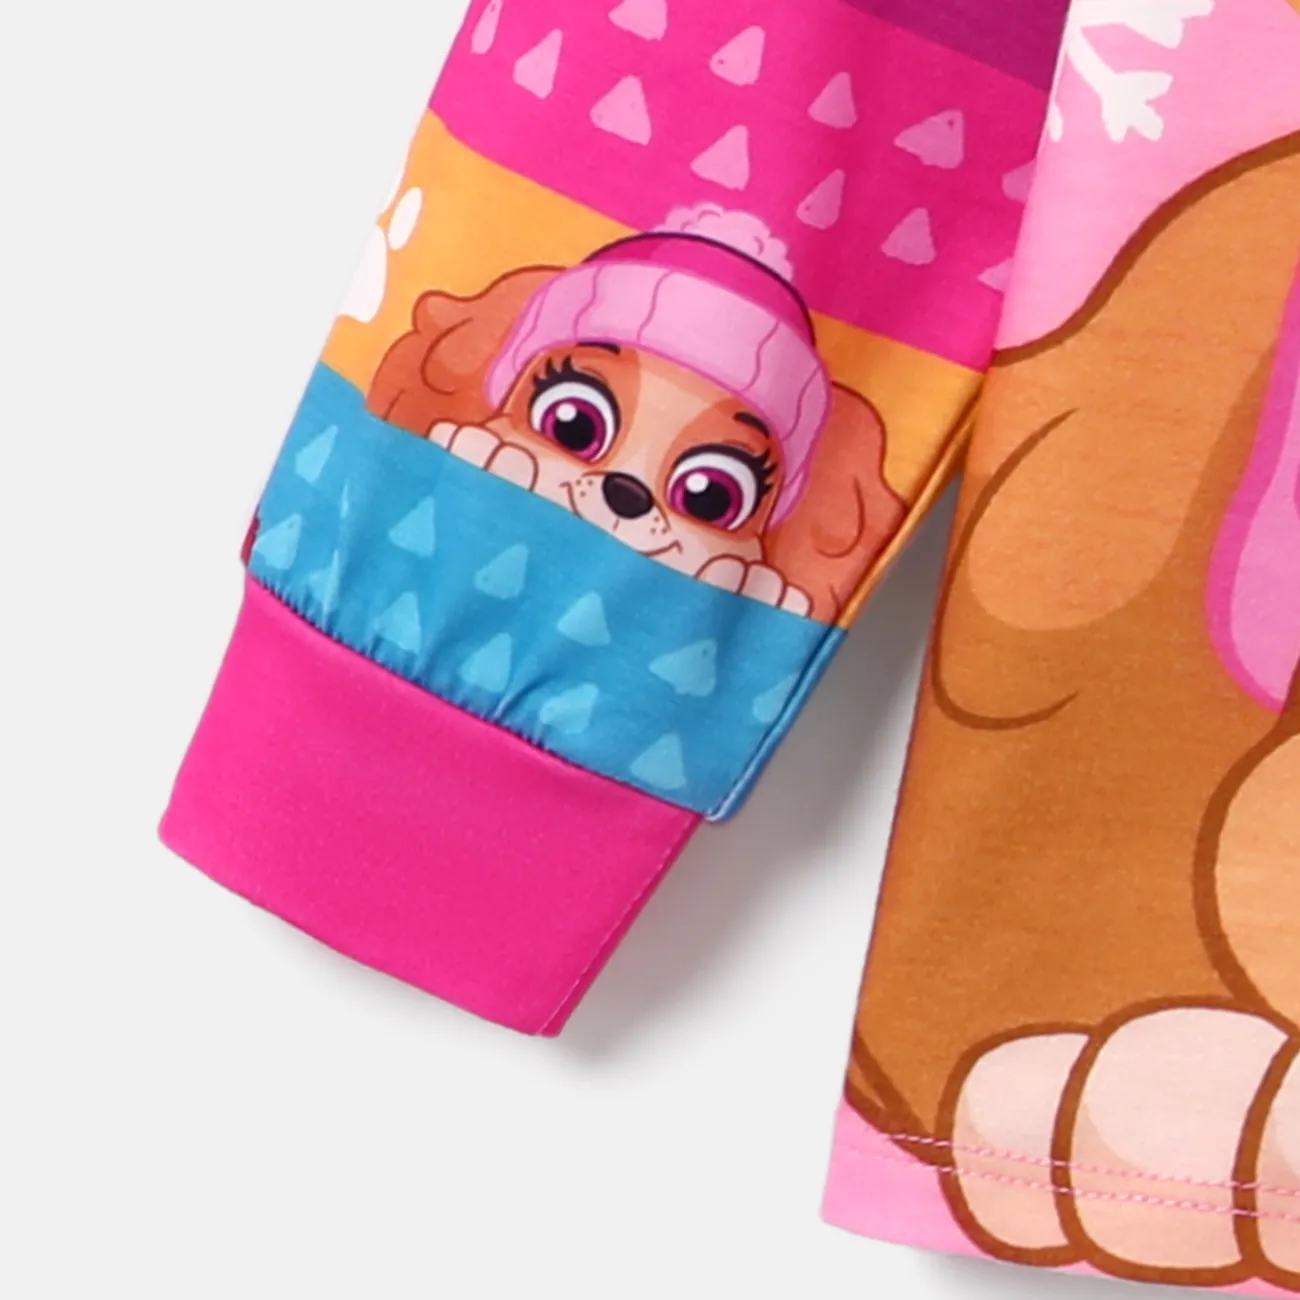 PAW Patrol 2pcs Toddler Girl/Boy Character Print Long-sleeve Pajamas Sets (Flame Resistant) Pink big image 1